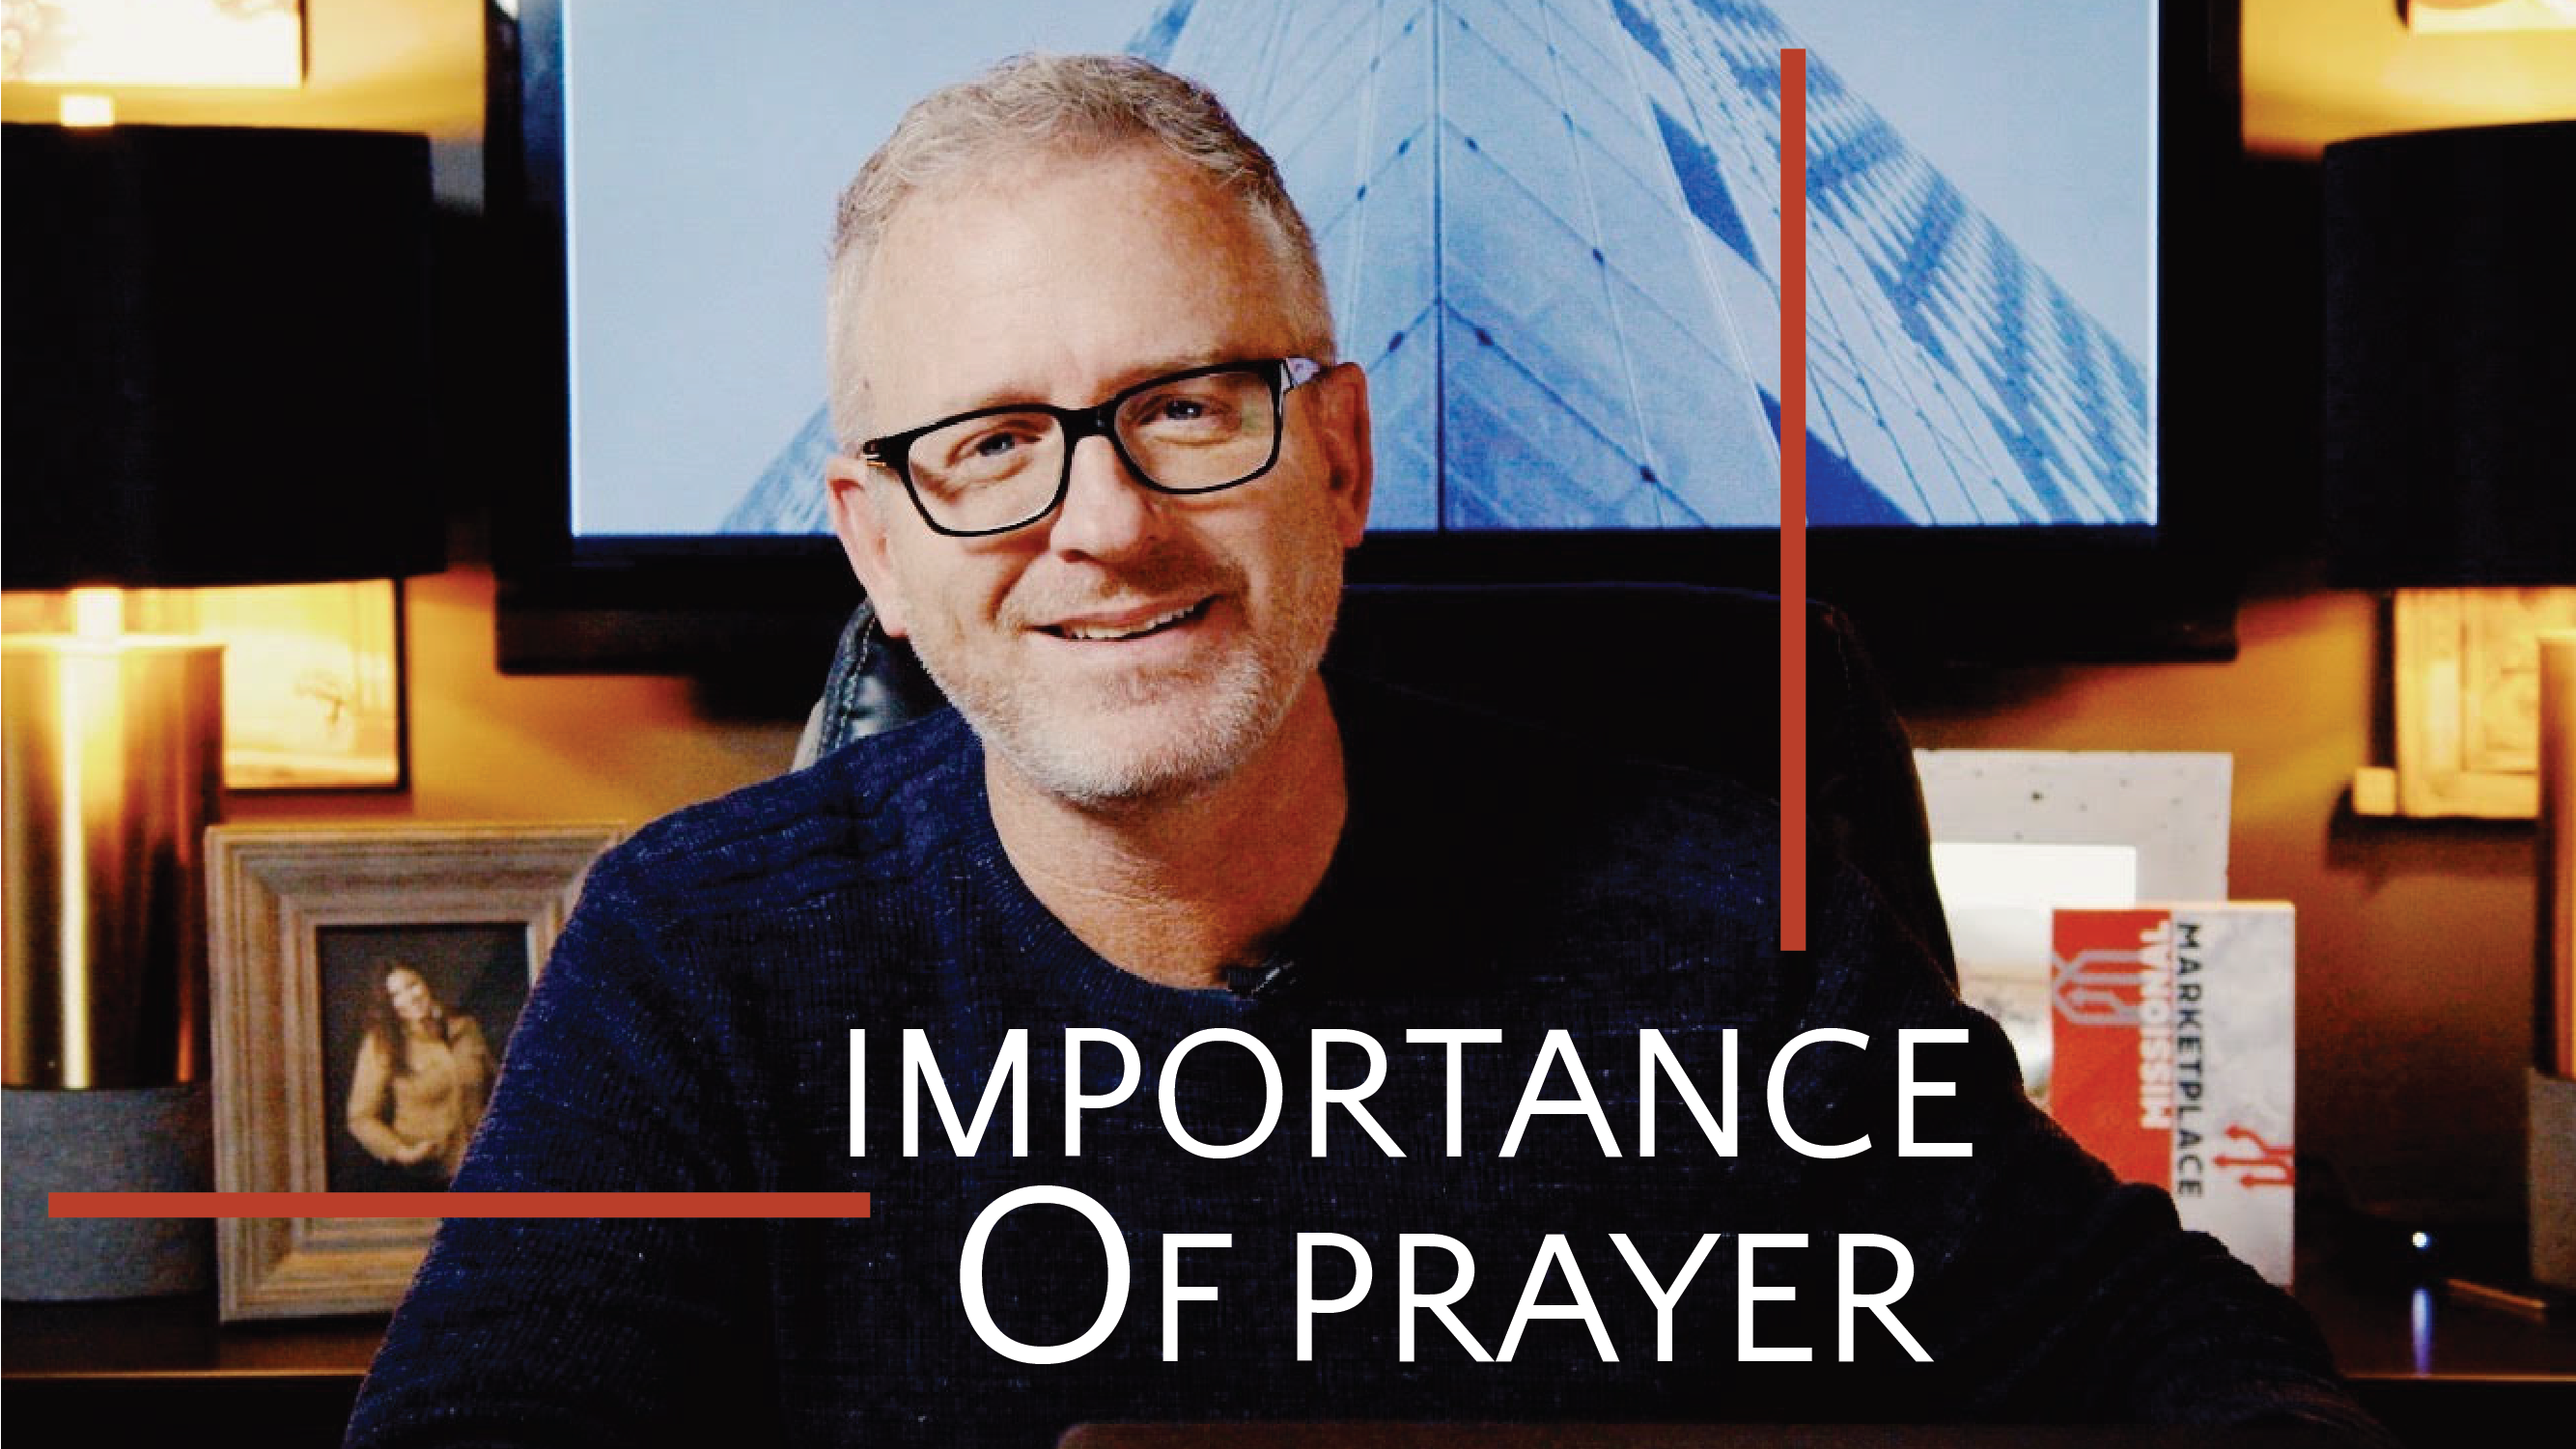 VIDEO: Importance of Prayer